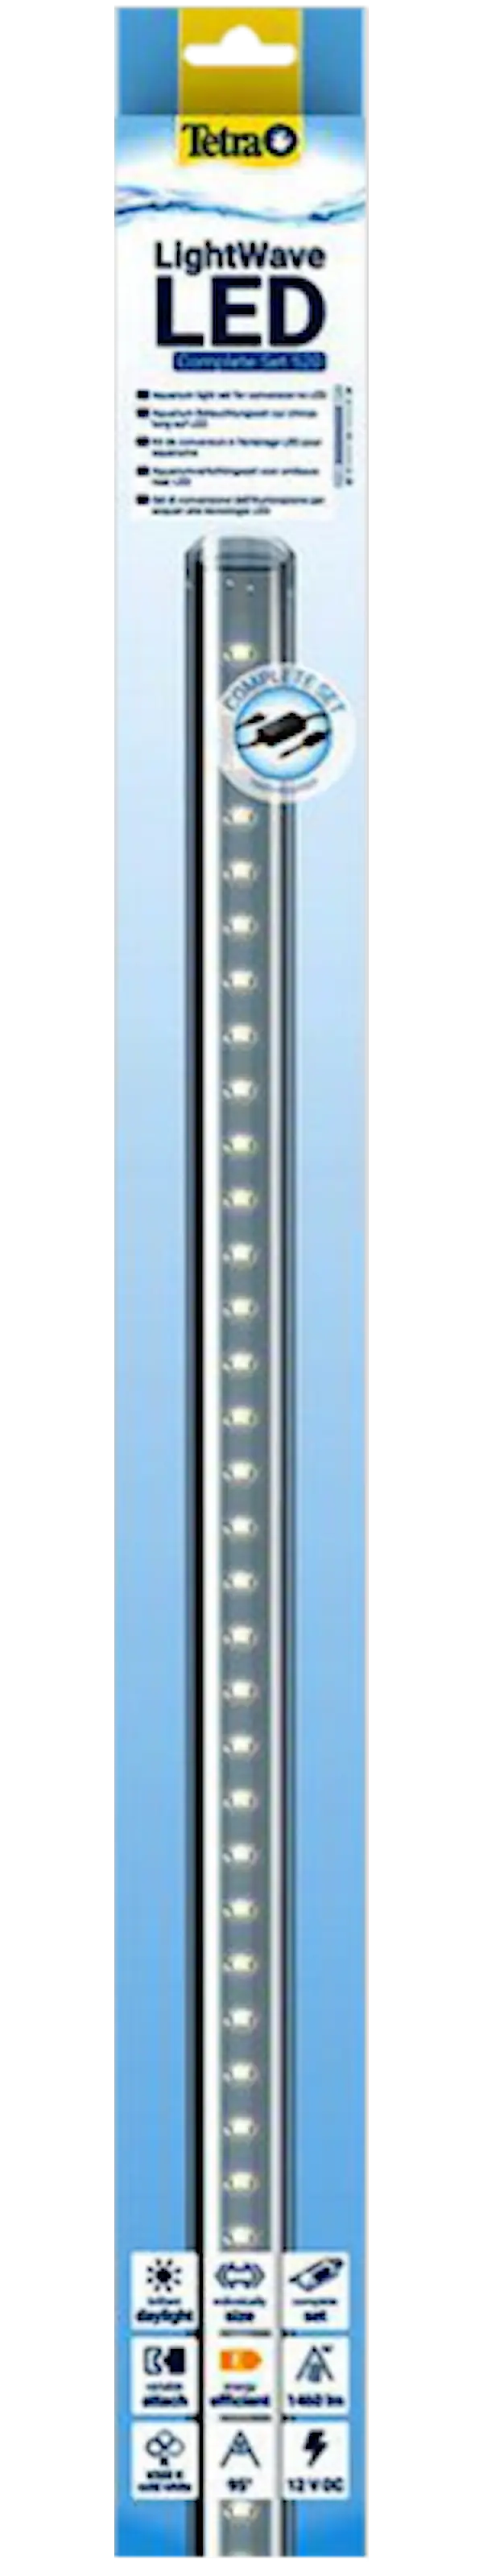 LightWave LED-enkeltlys, 720 - 800 mm